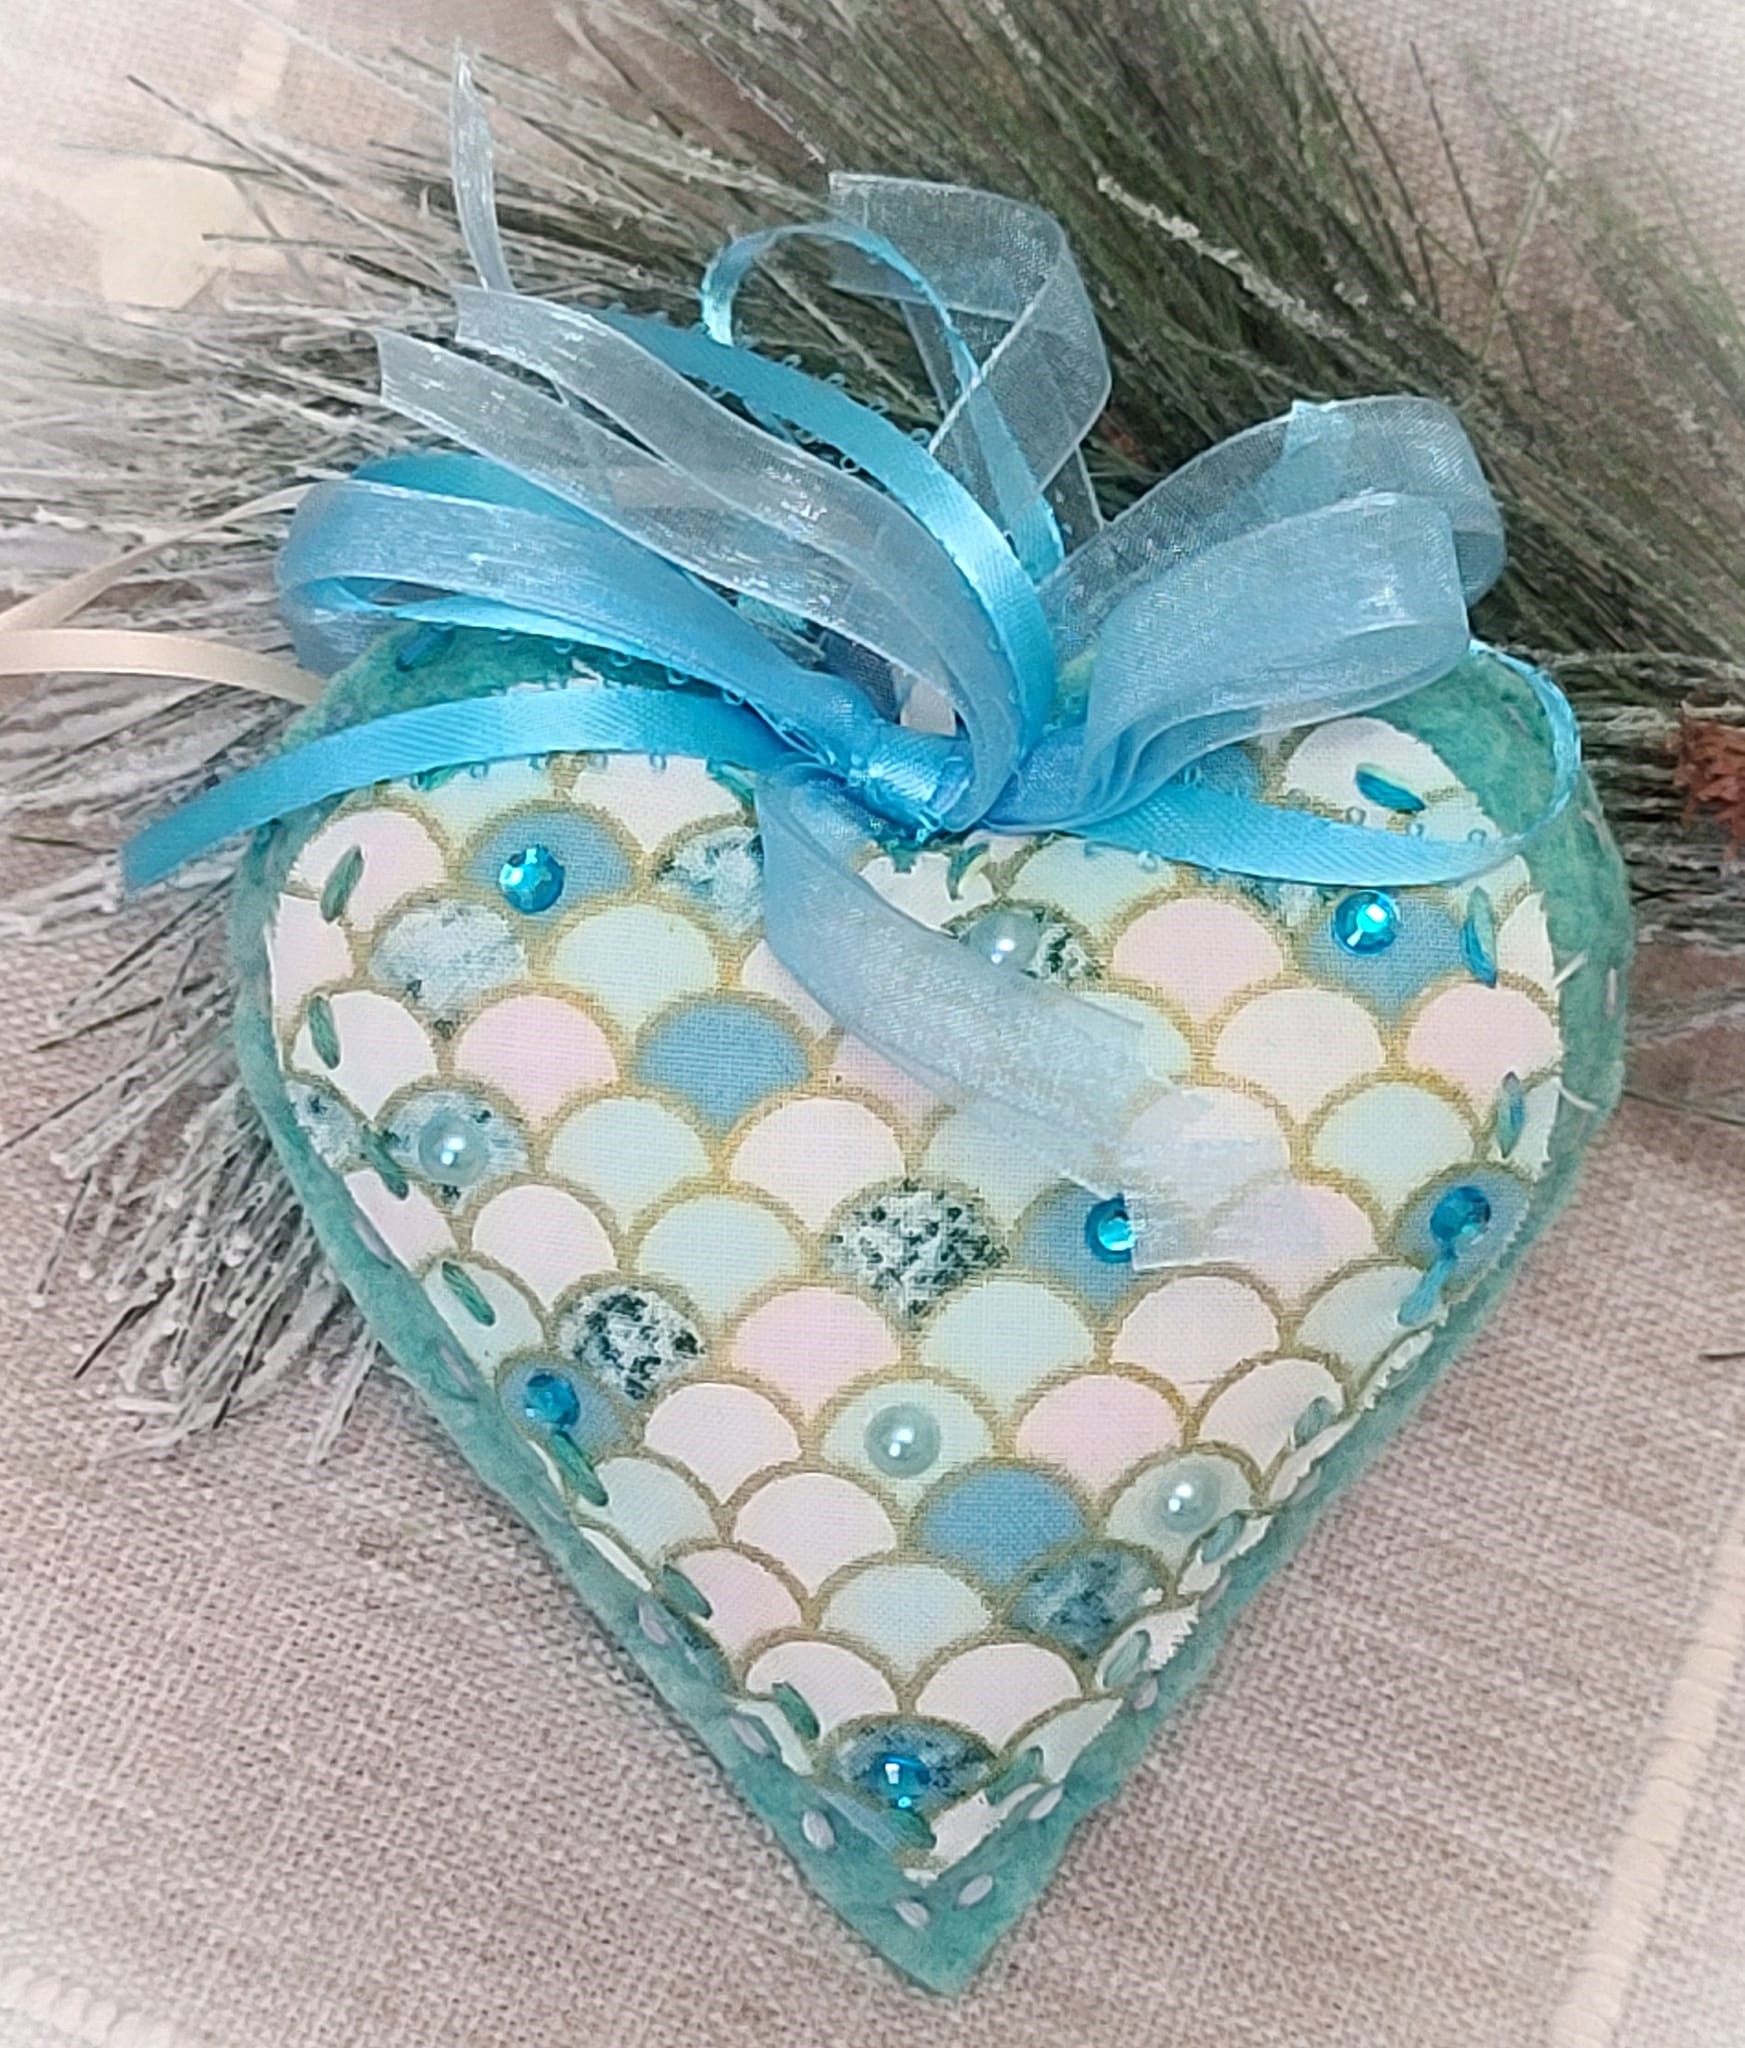 Felt and fabric mermaid turquoise heart ornaments